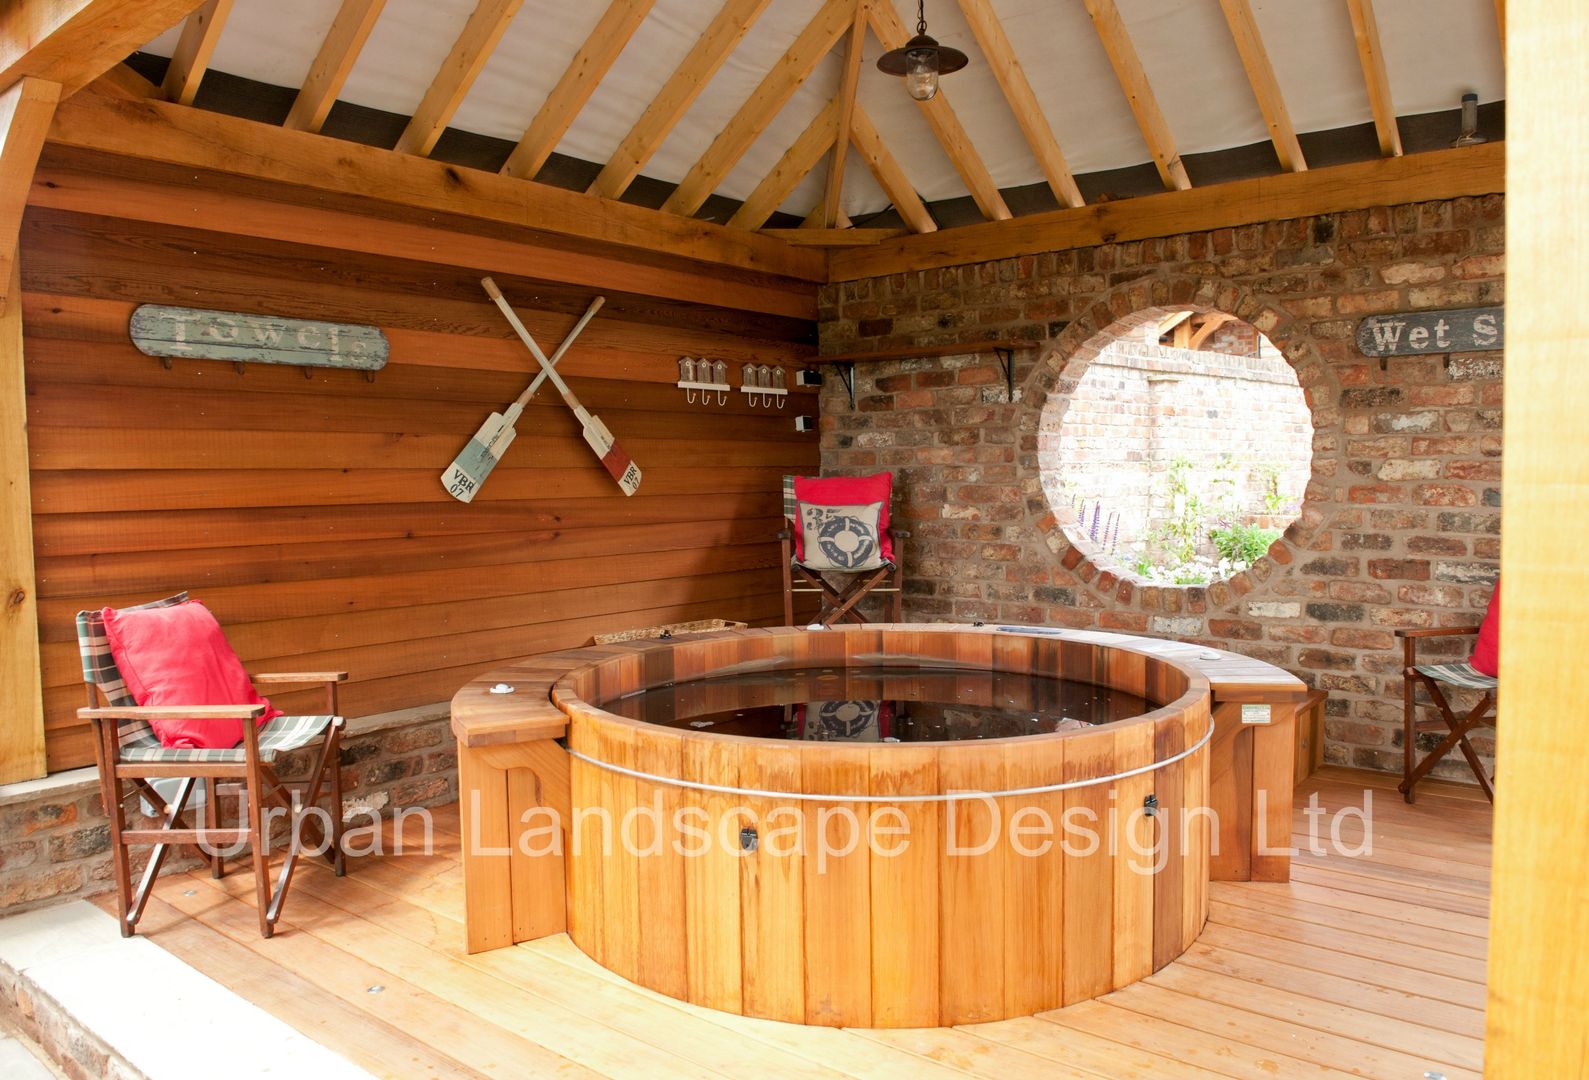 Outdoor Hot Tub Area & Oak Building Urban Landscape Design Ltd Jardines rurales